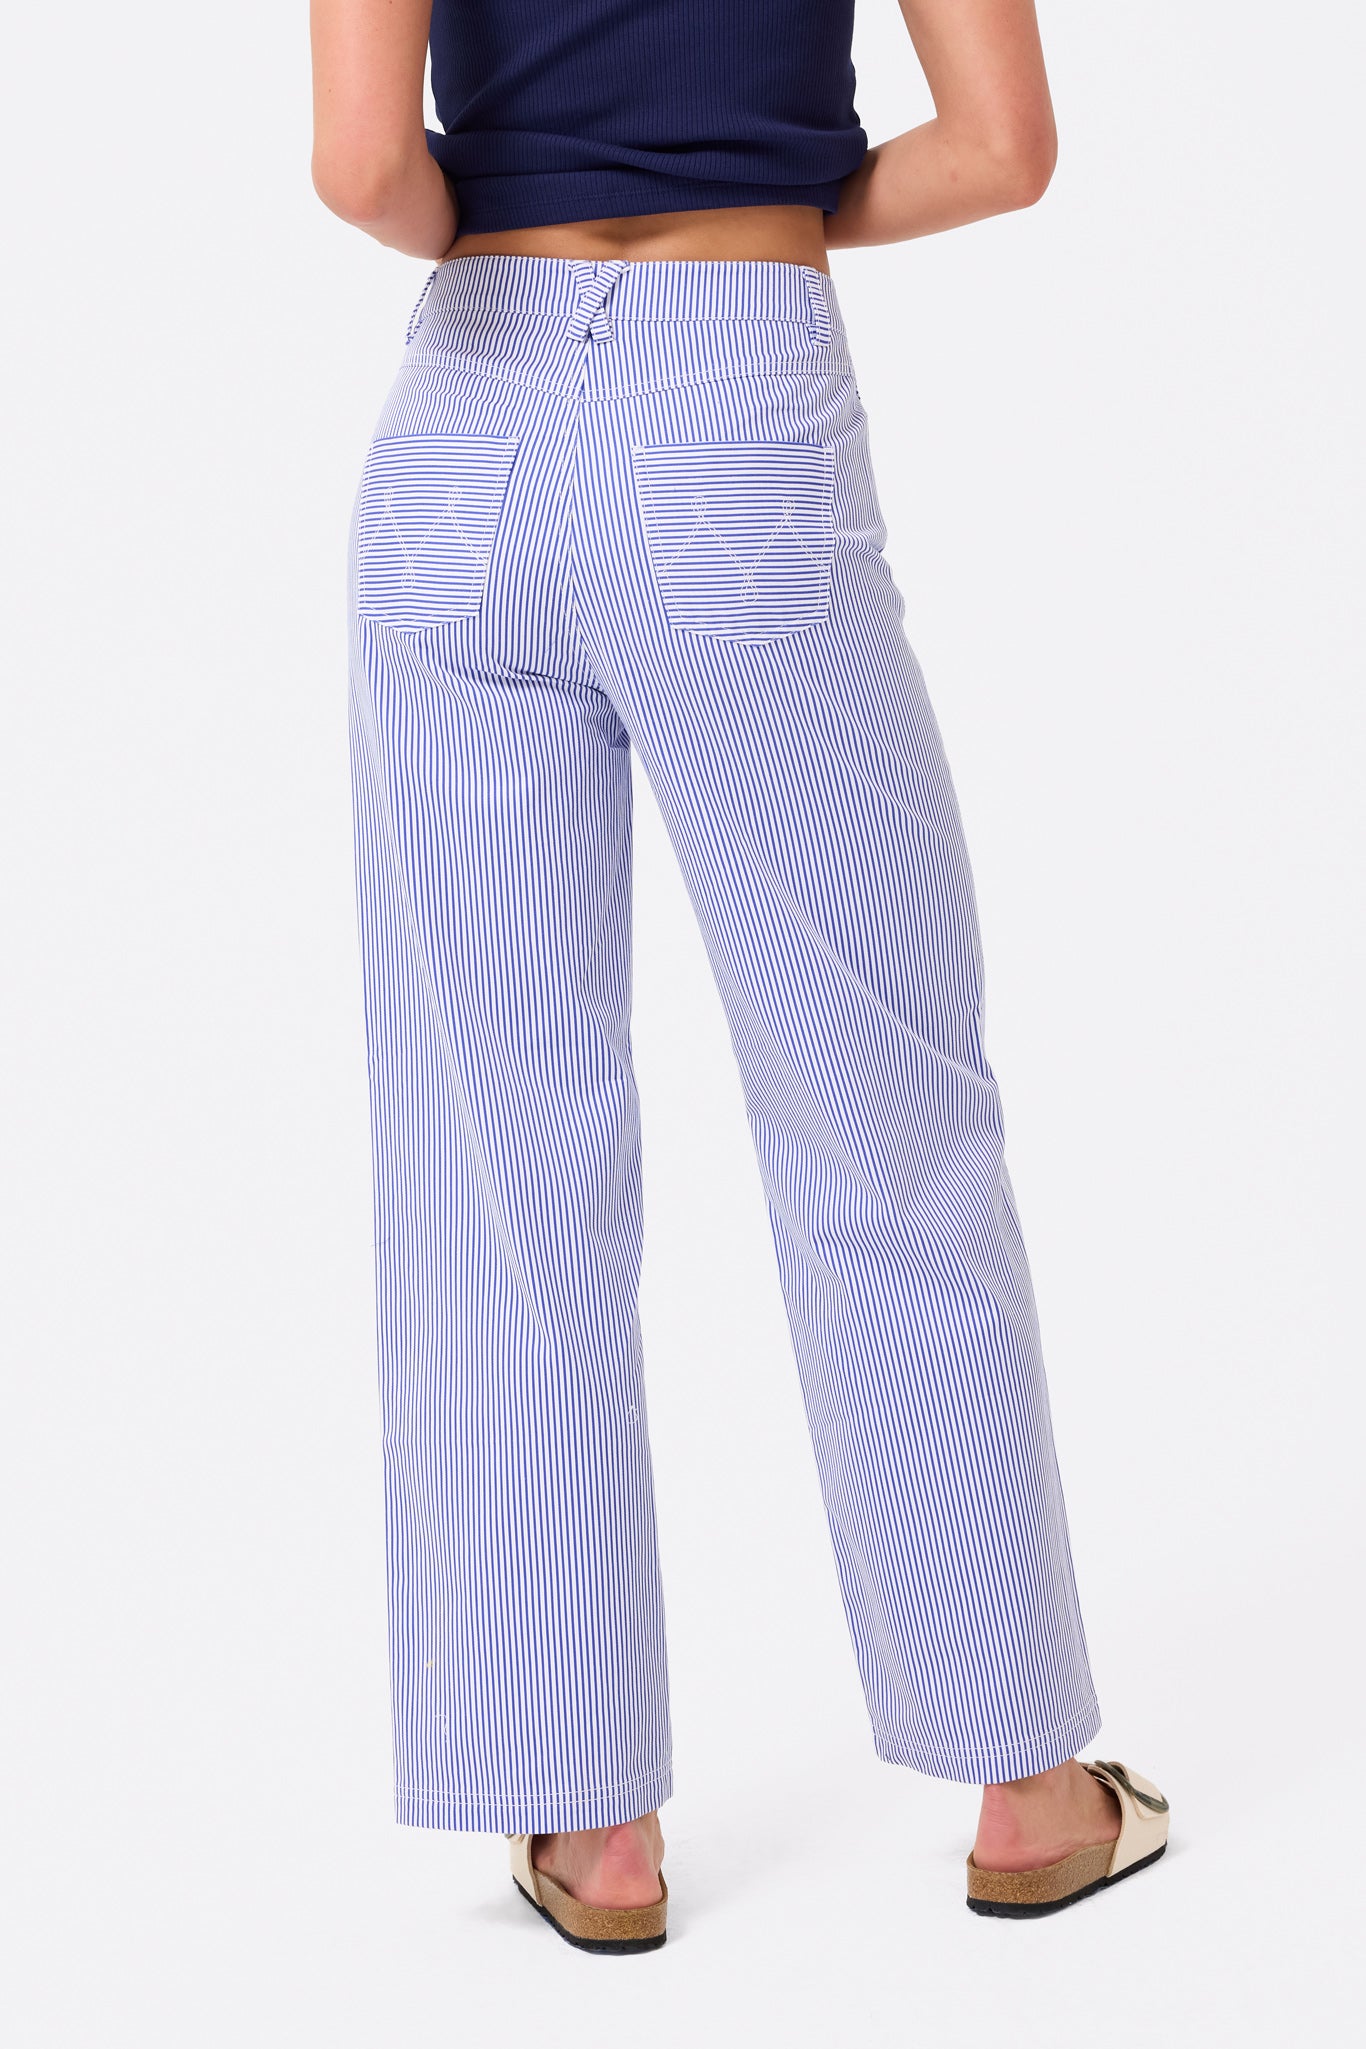 Twill Pajama Pants - Light blue/striped - Ladies